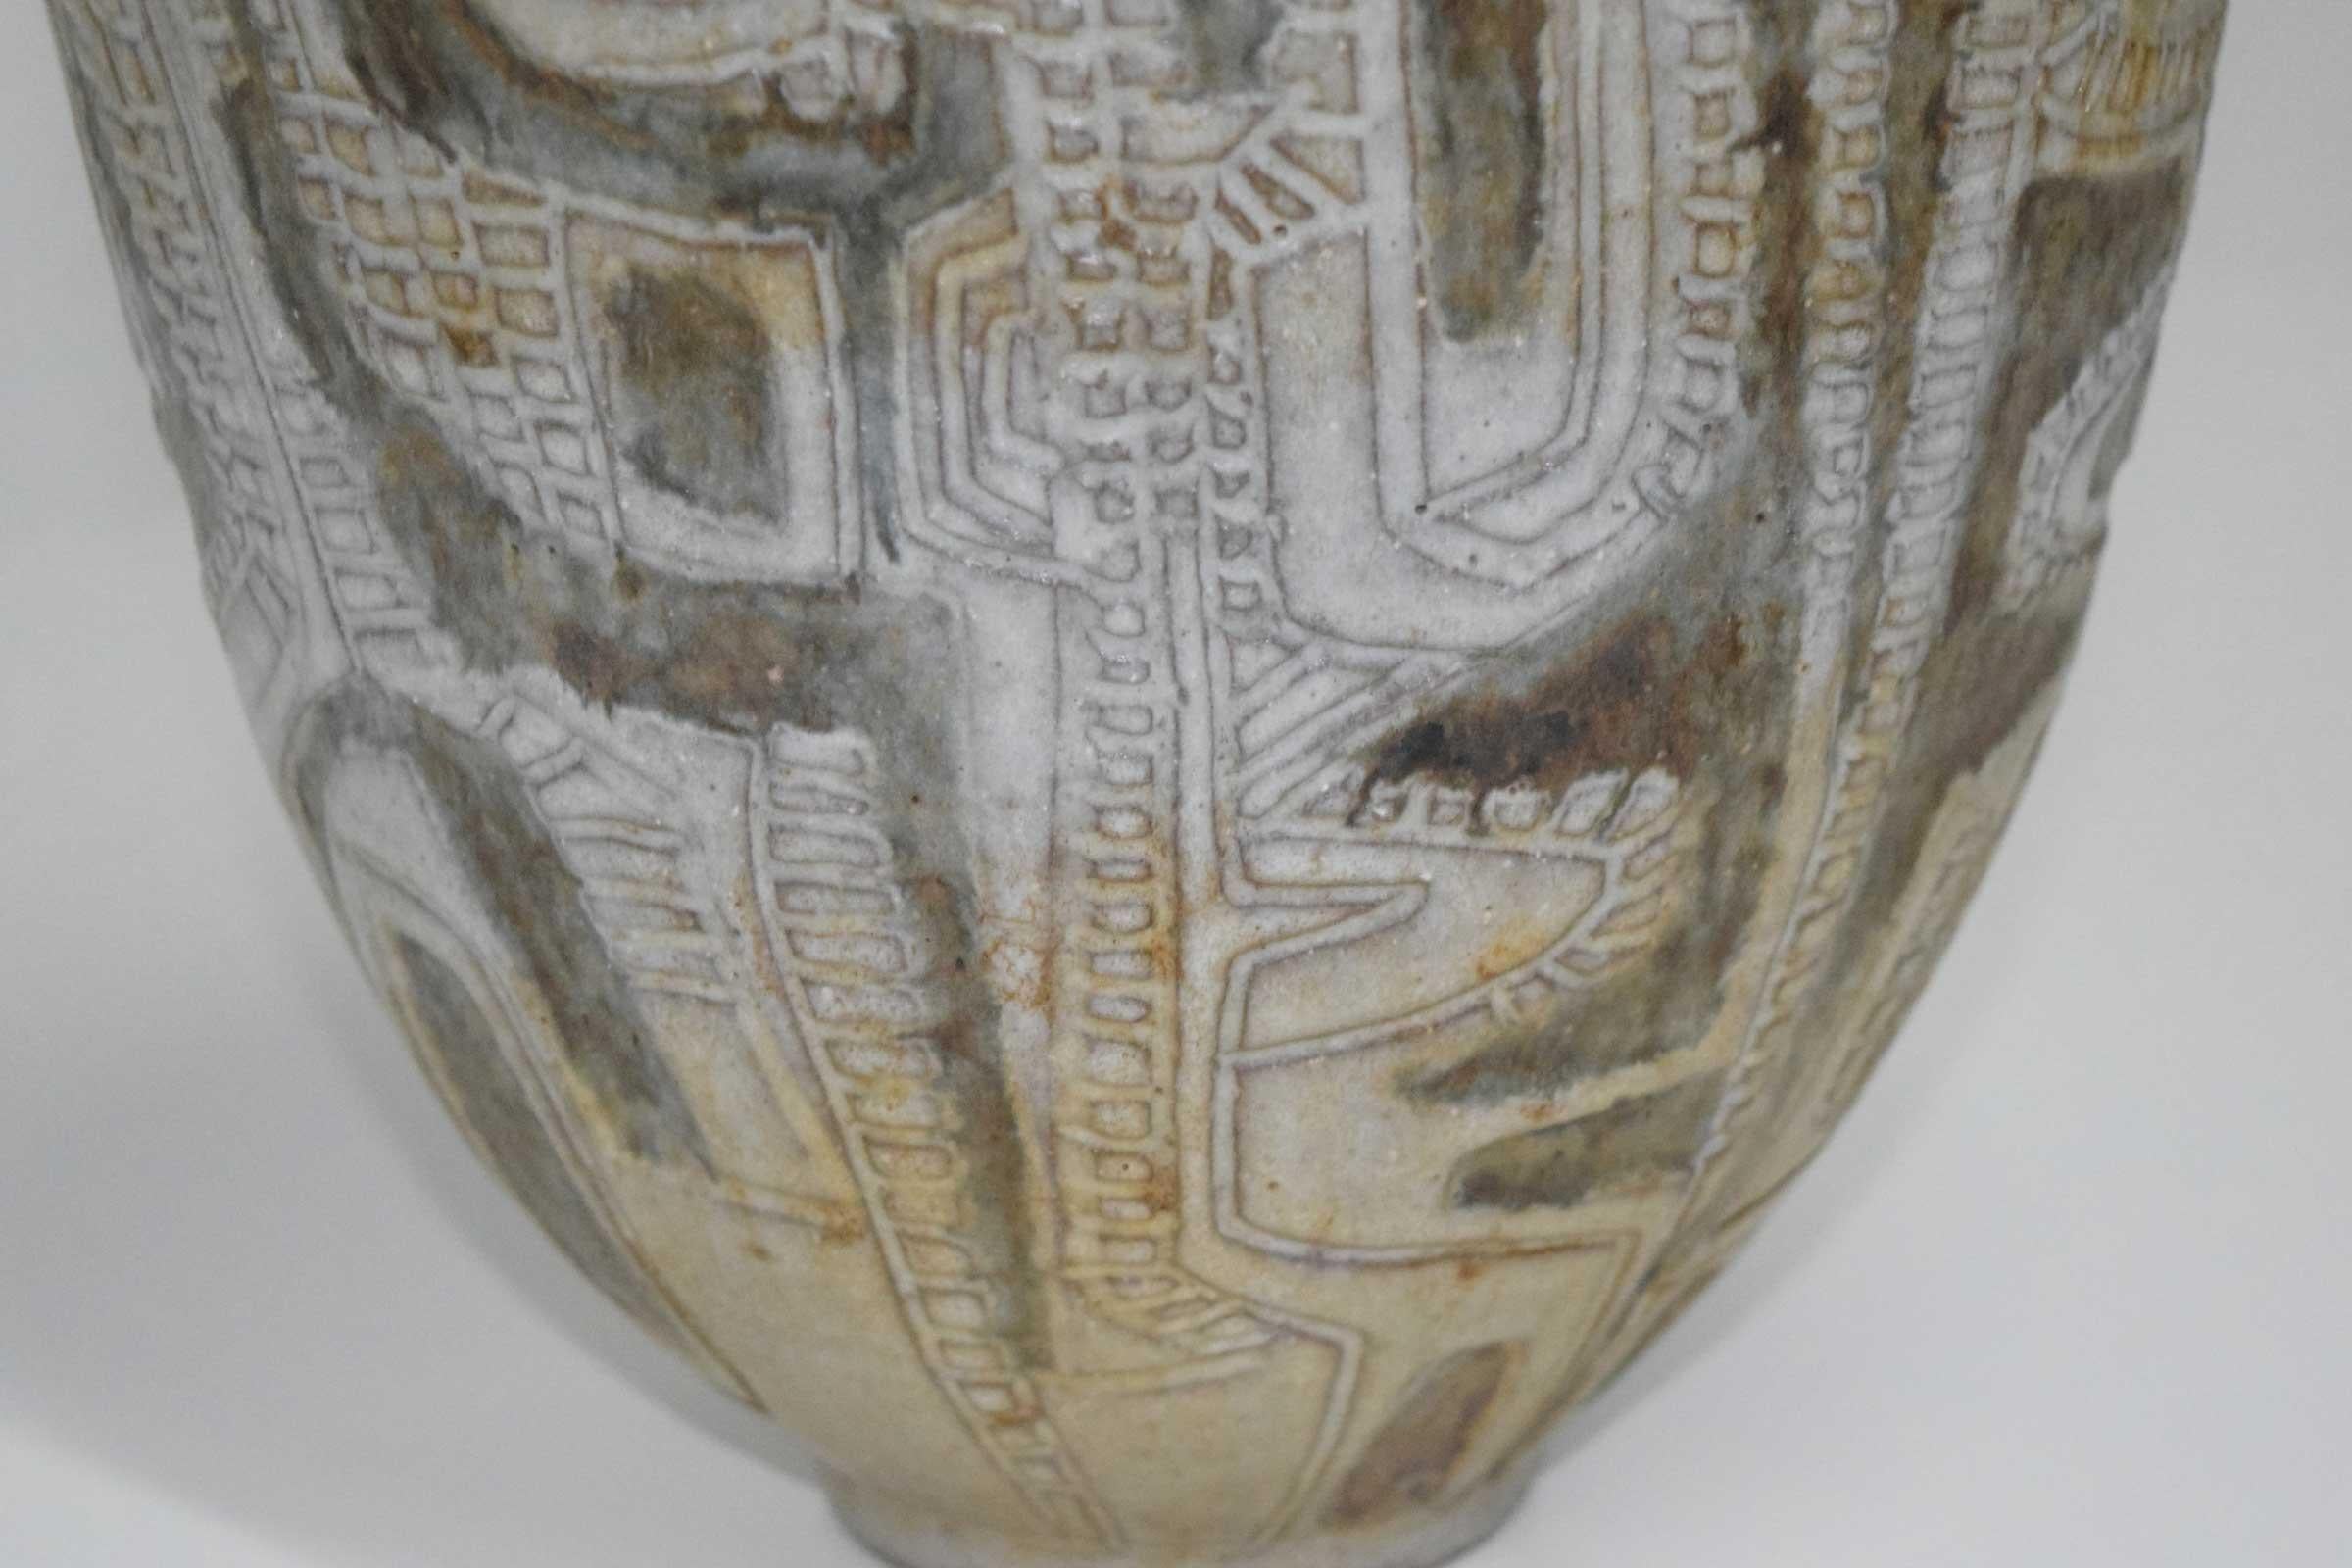 Clyde Burt Ceramic Vase or Vessel with Sgraffito 1